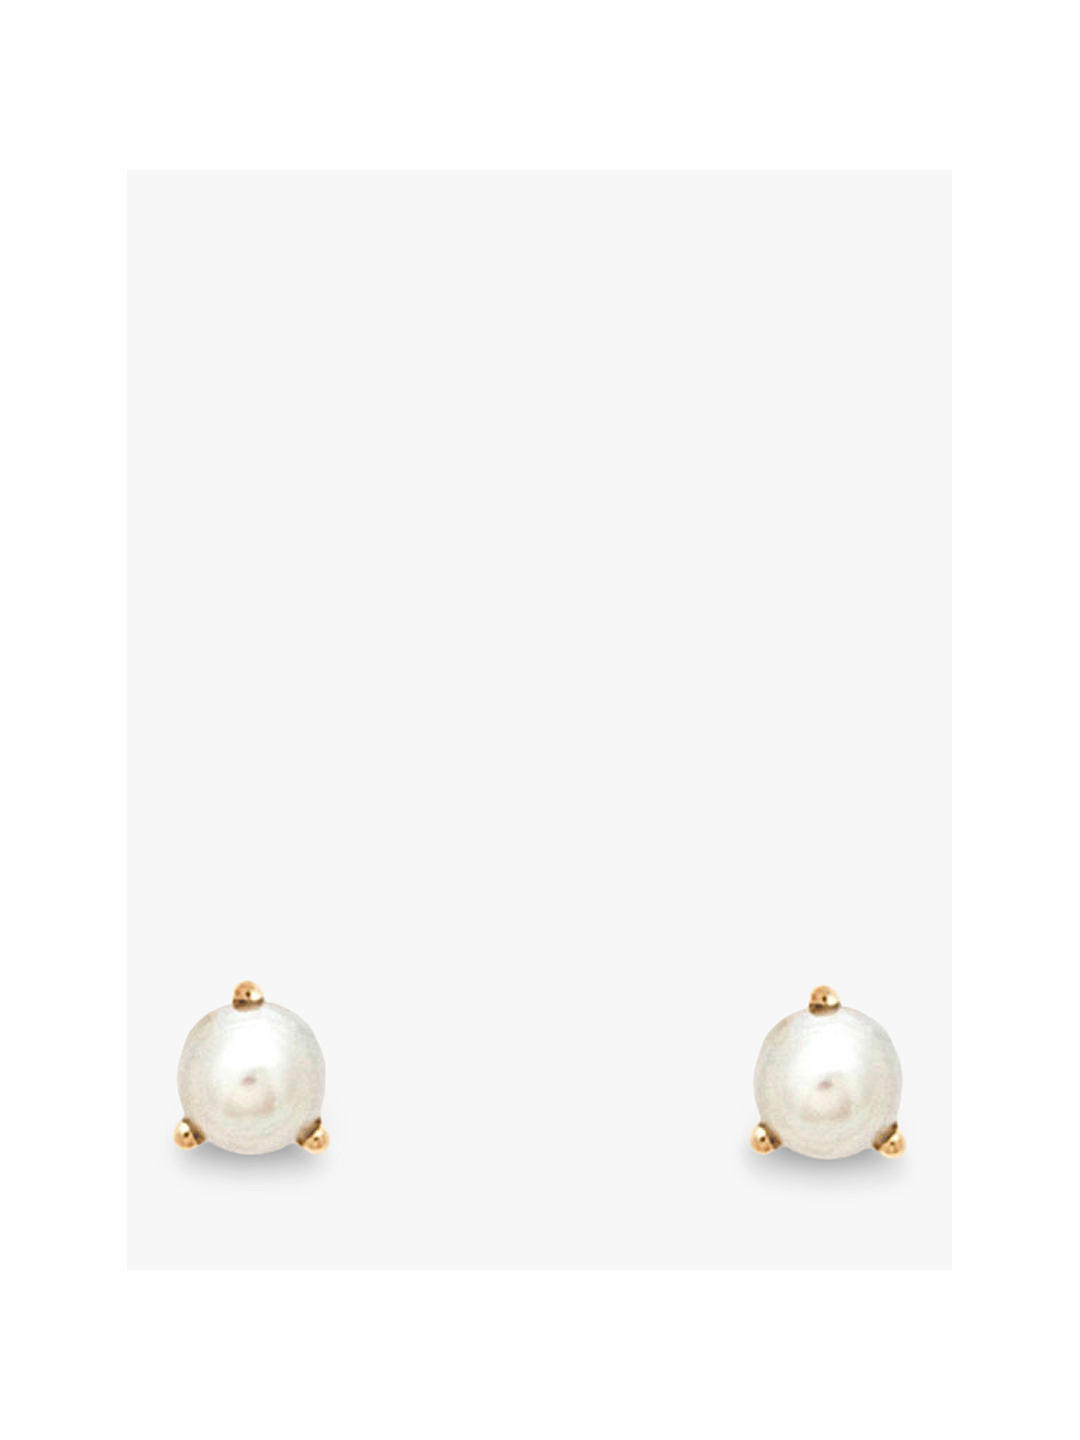 Leah Alexandra Freshwater Pearl Stud Earrings, Gold/White